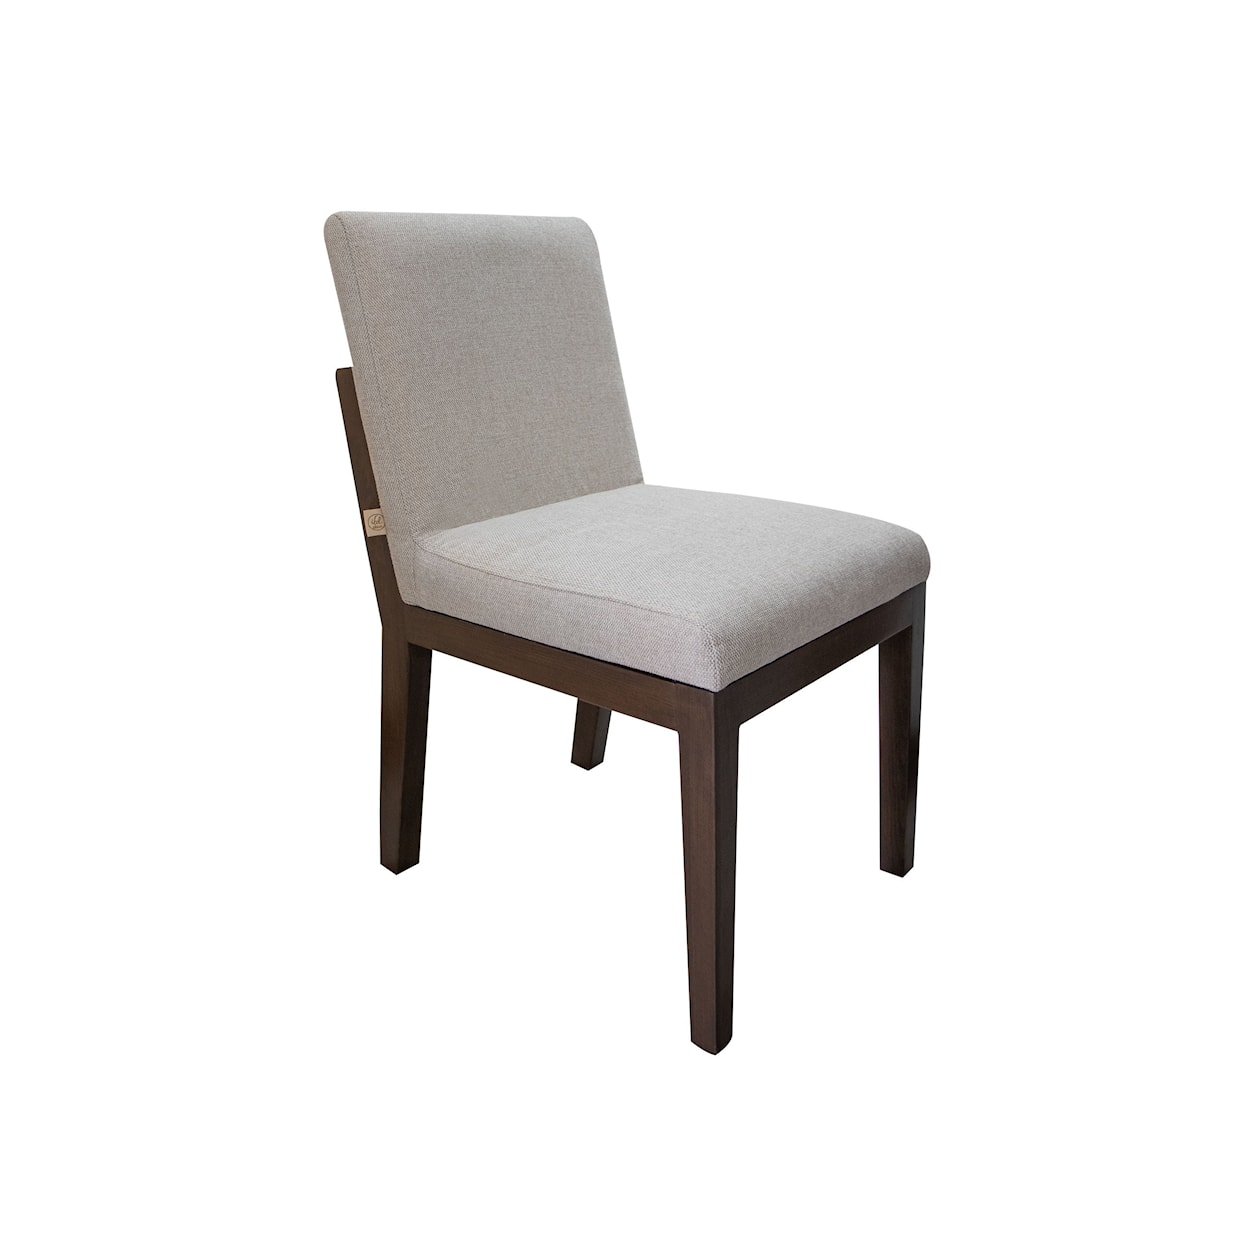 VFM Signature Natural Parota Upholstered Chair